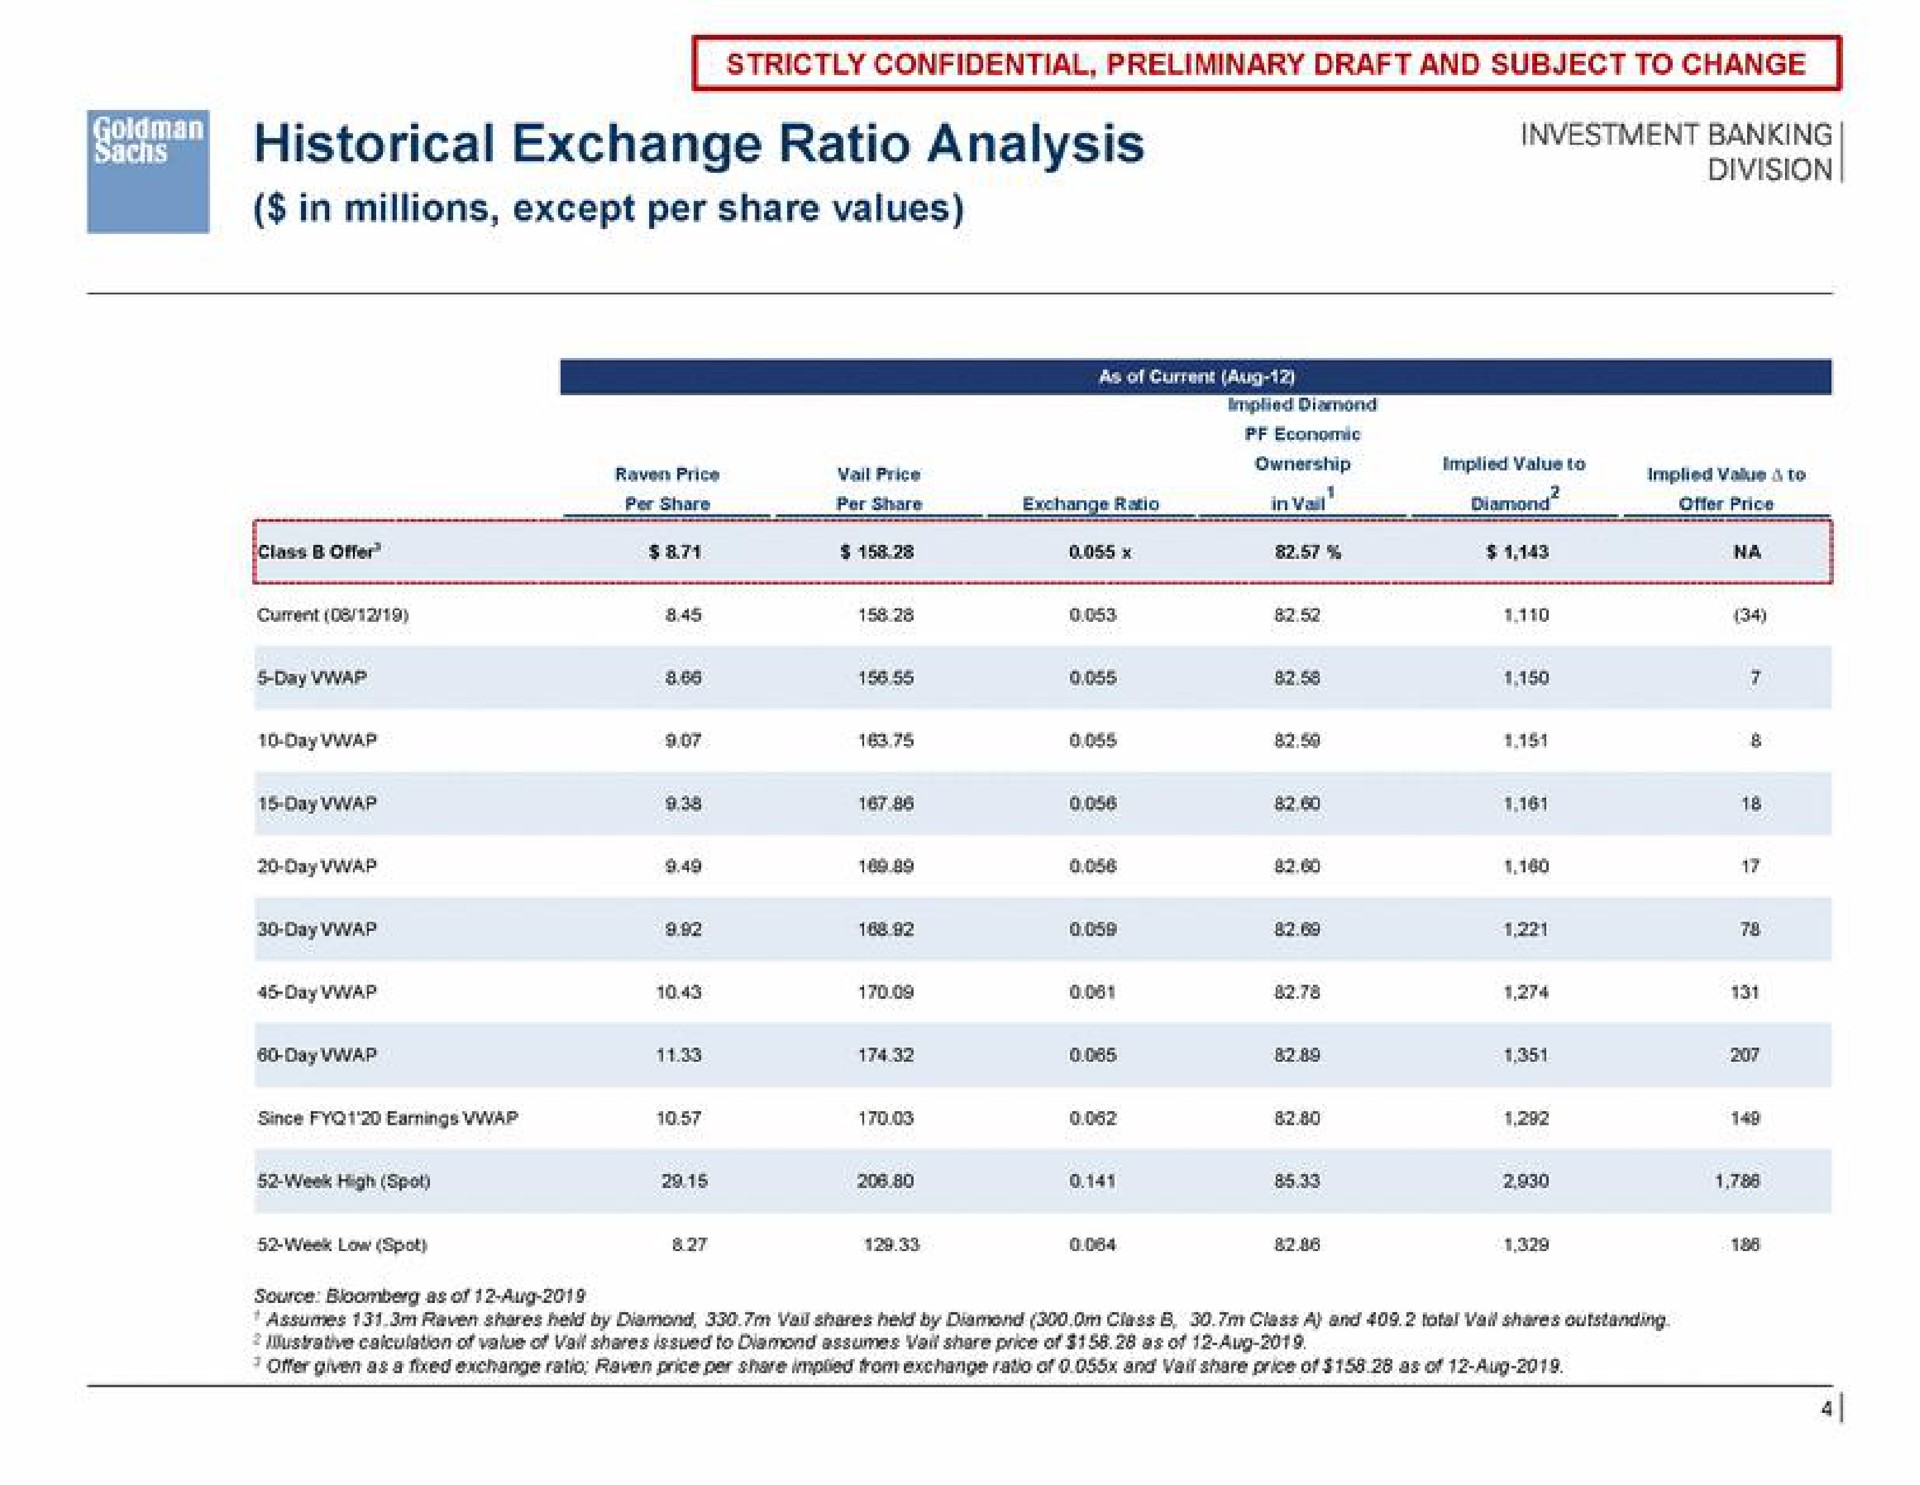 historical exchange ratio analysis | Goldman Sachs